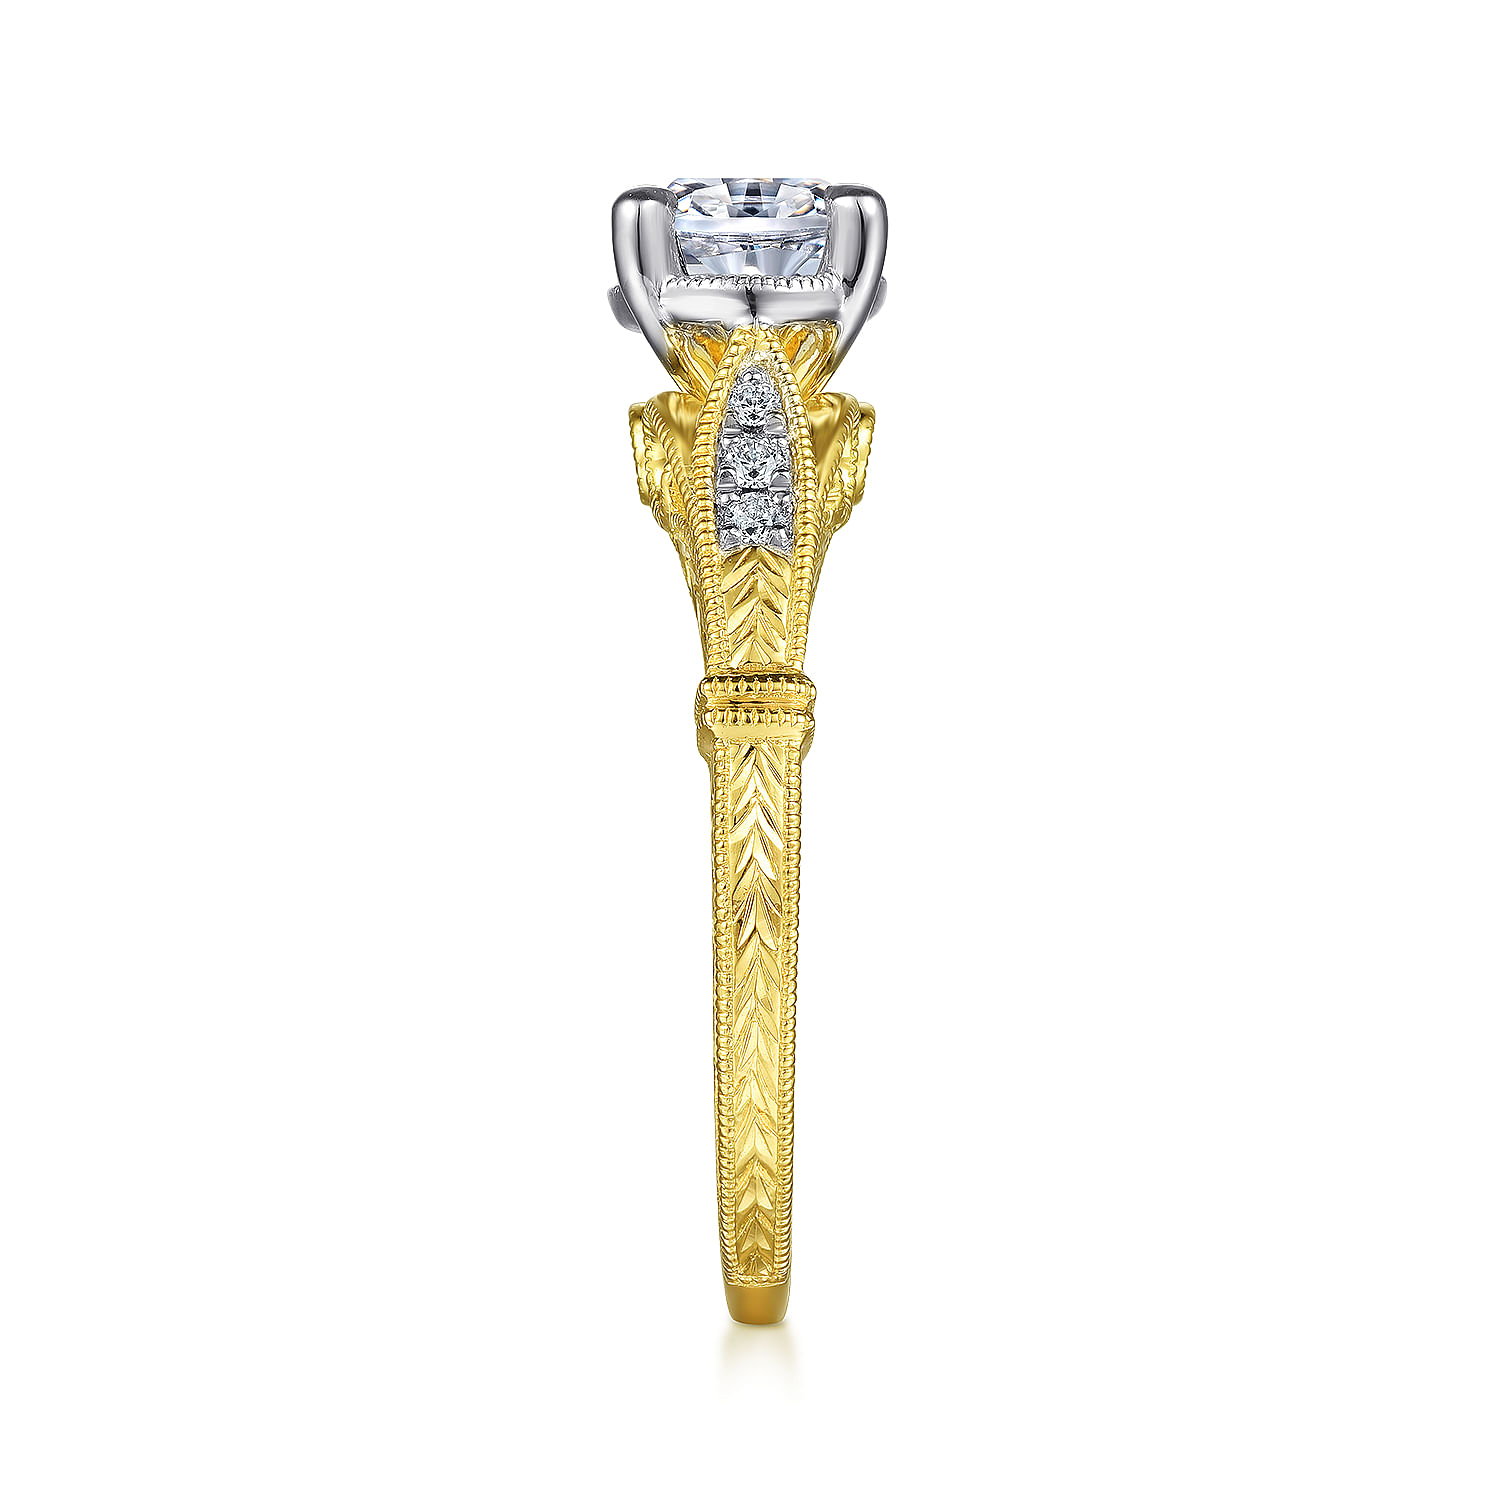 Vintage Inspired 14K White-Yellow Gold Horizontal Oval Diamond Engagement Ring